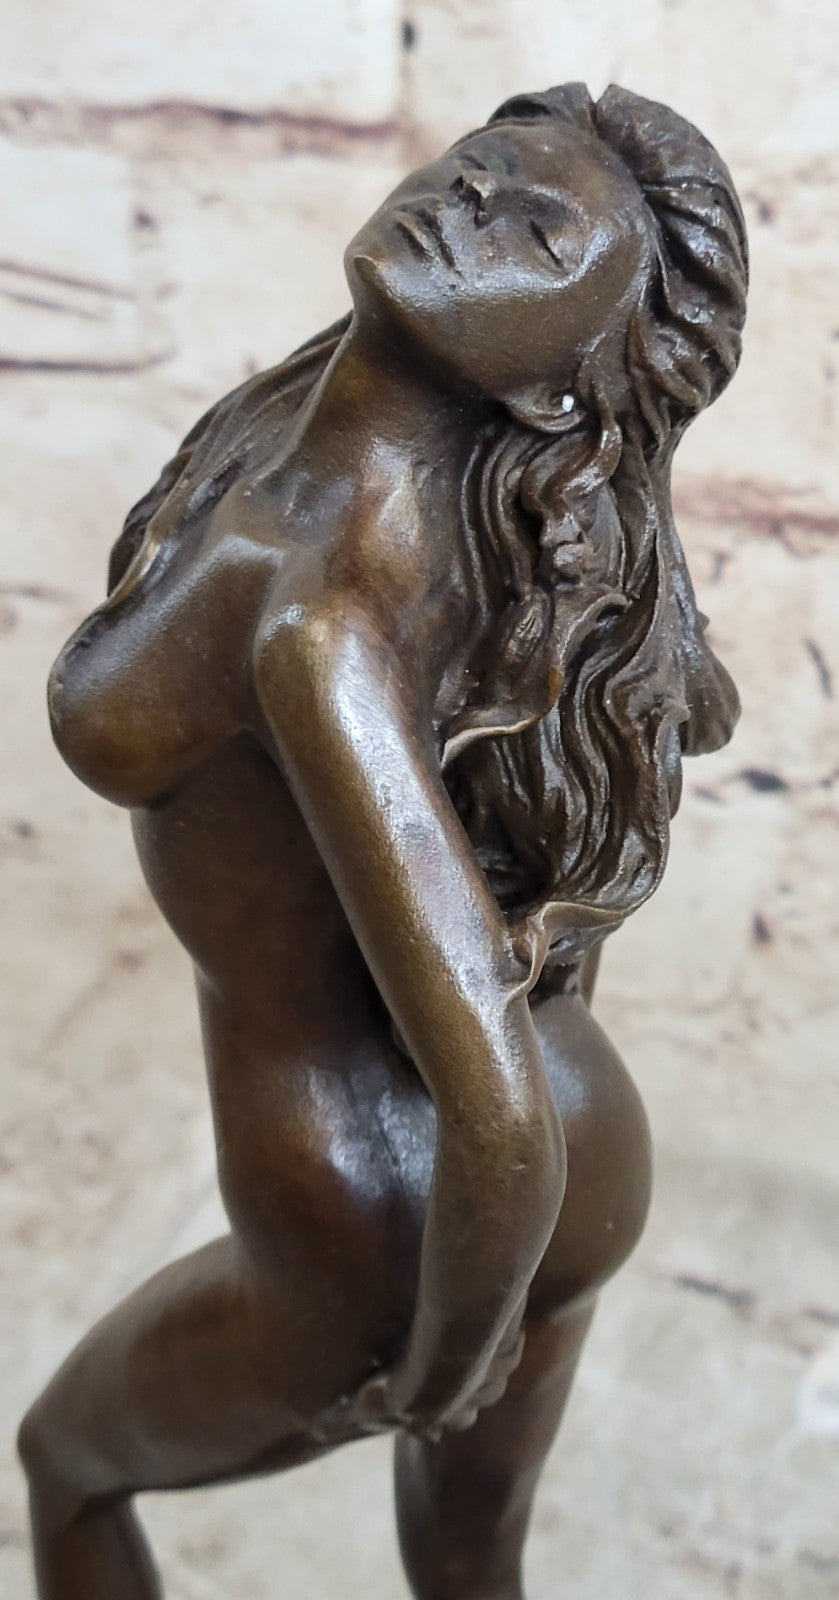 Sensual Modest Nude Girl Figure Athlete Bronze Marble Statue Art Sculpture Large